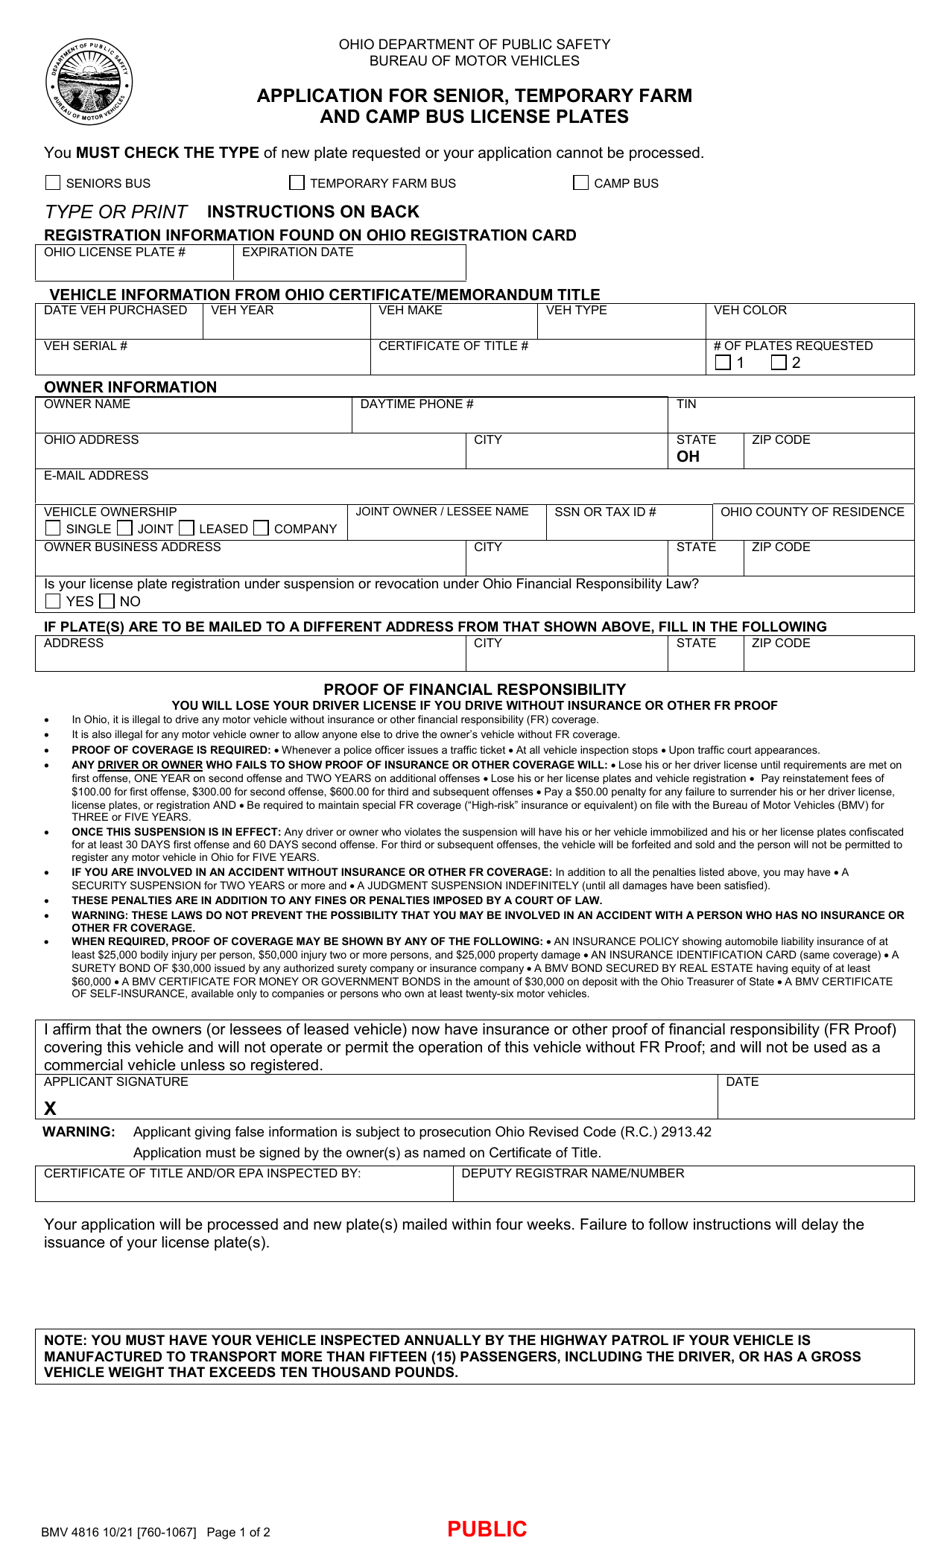 Form BMV4816 Application for Seniors, Temporary Farm and Camp Bus License Plates - Ohio, Page 1